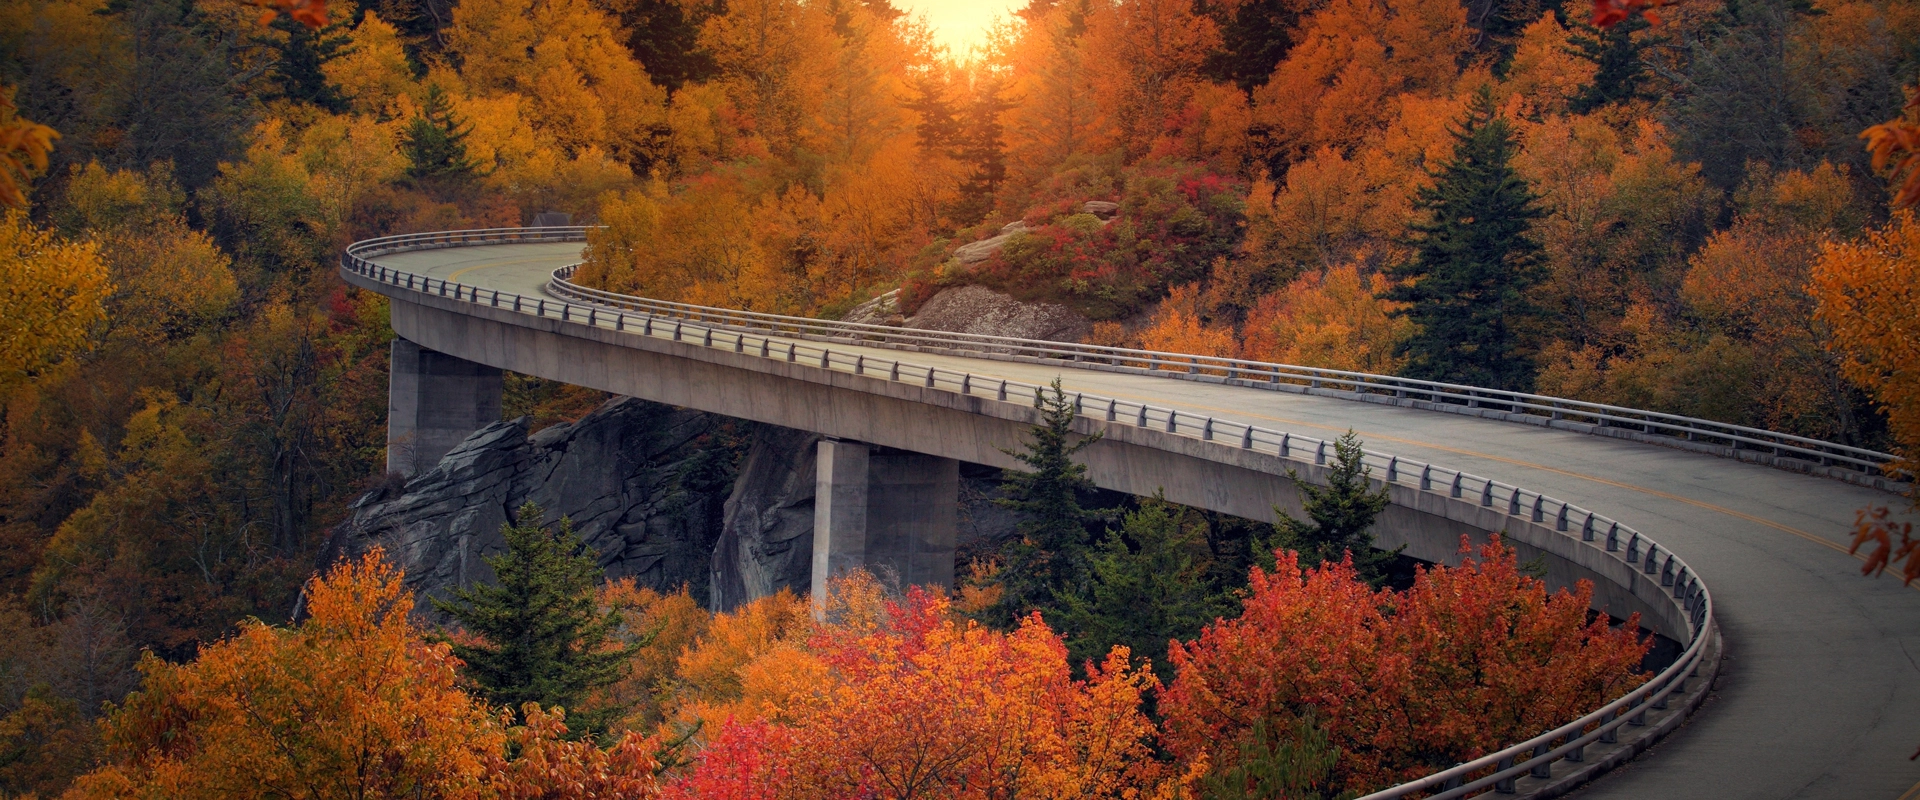 A bridge leading through the autumn forest